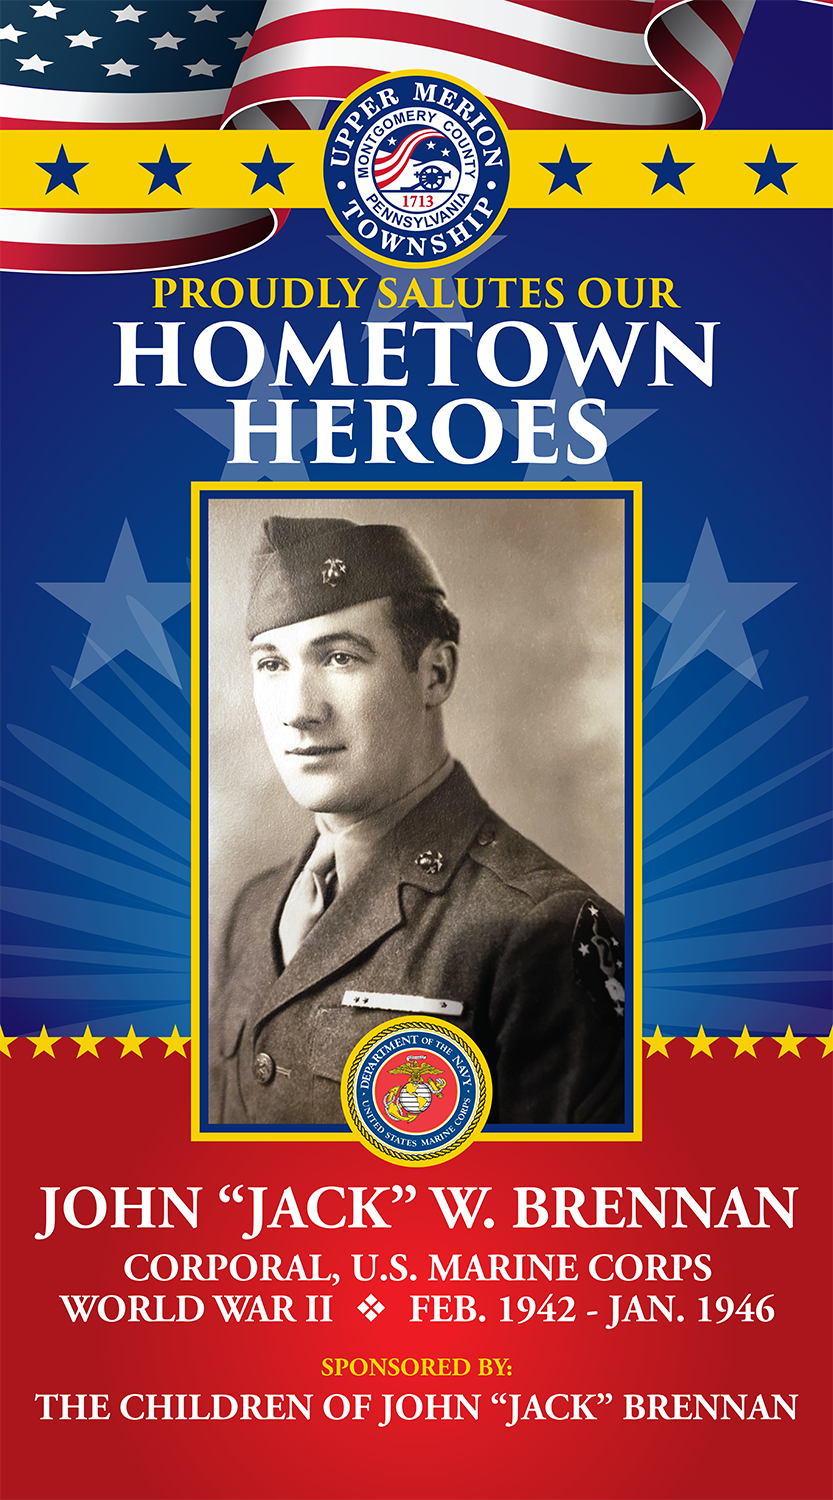 Hometown Heroes Banner Program Registration Opens on November 7